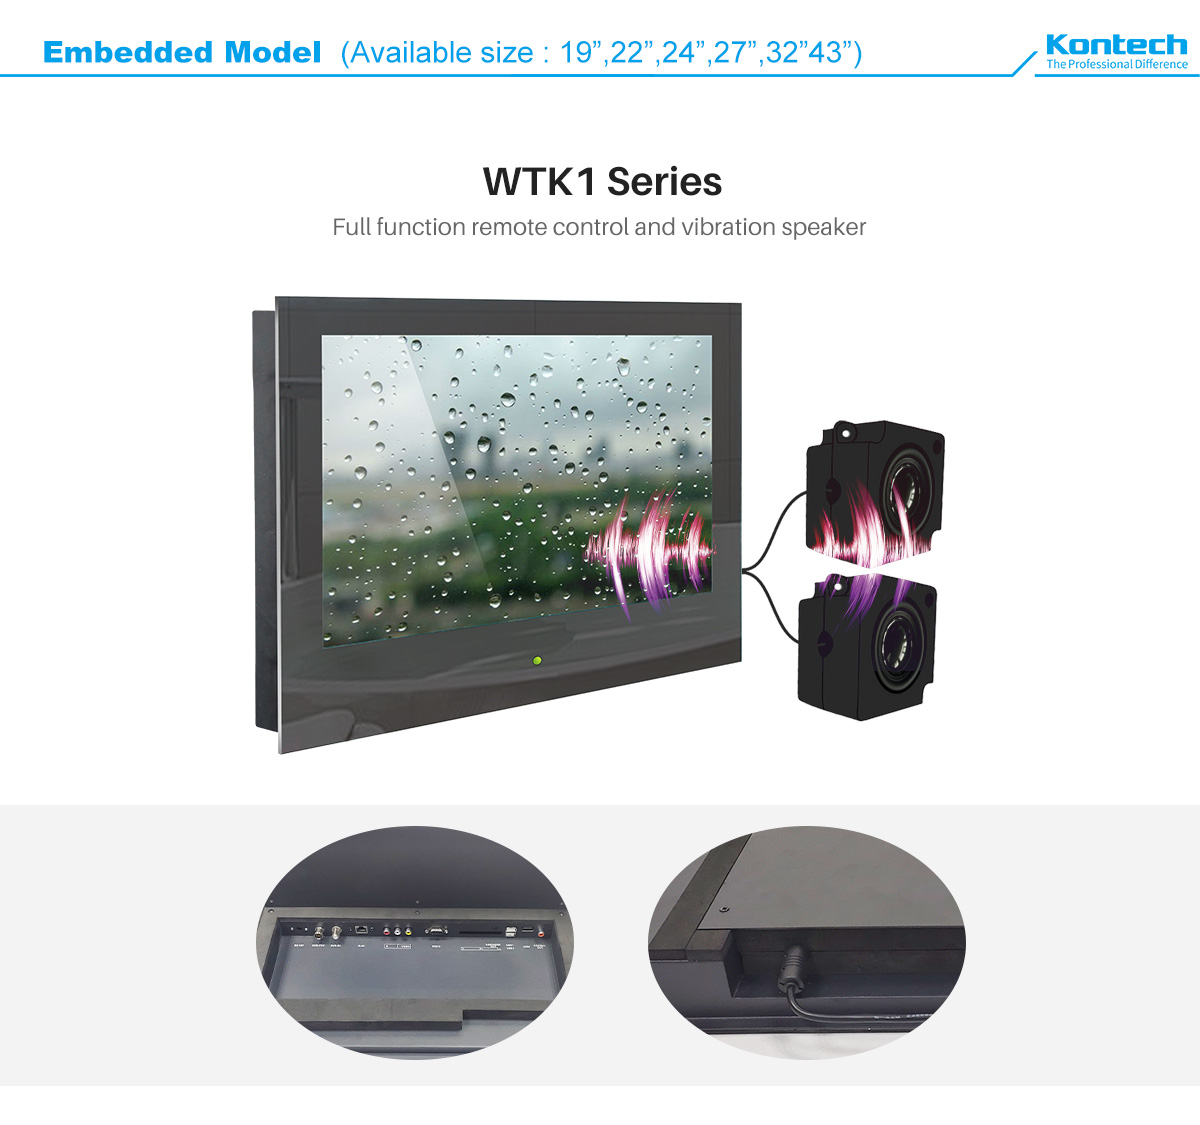 waterproof TV with audio device